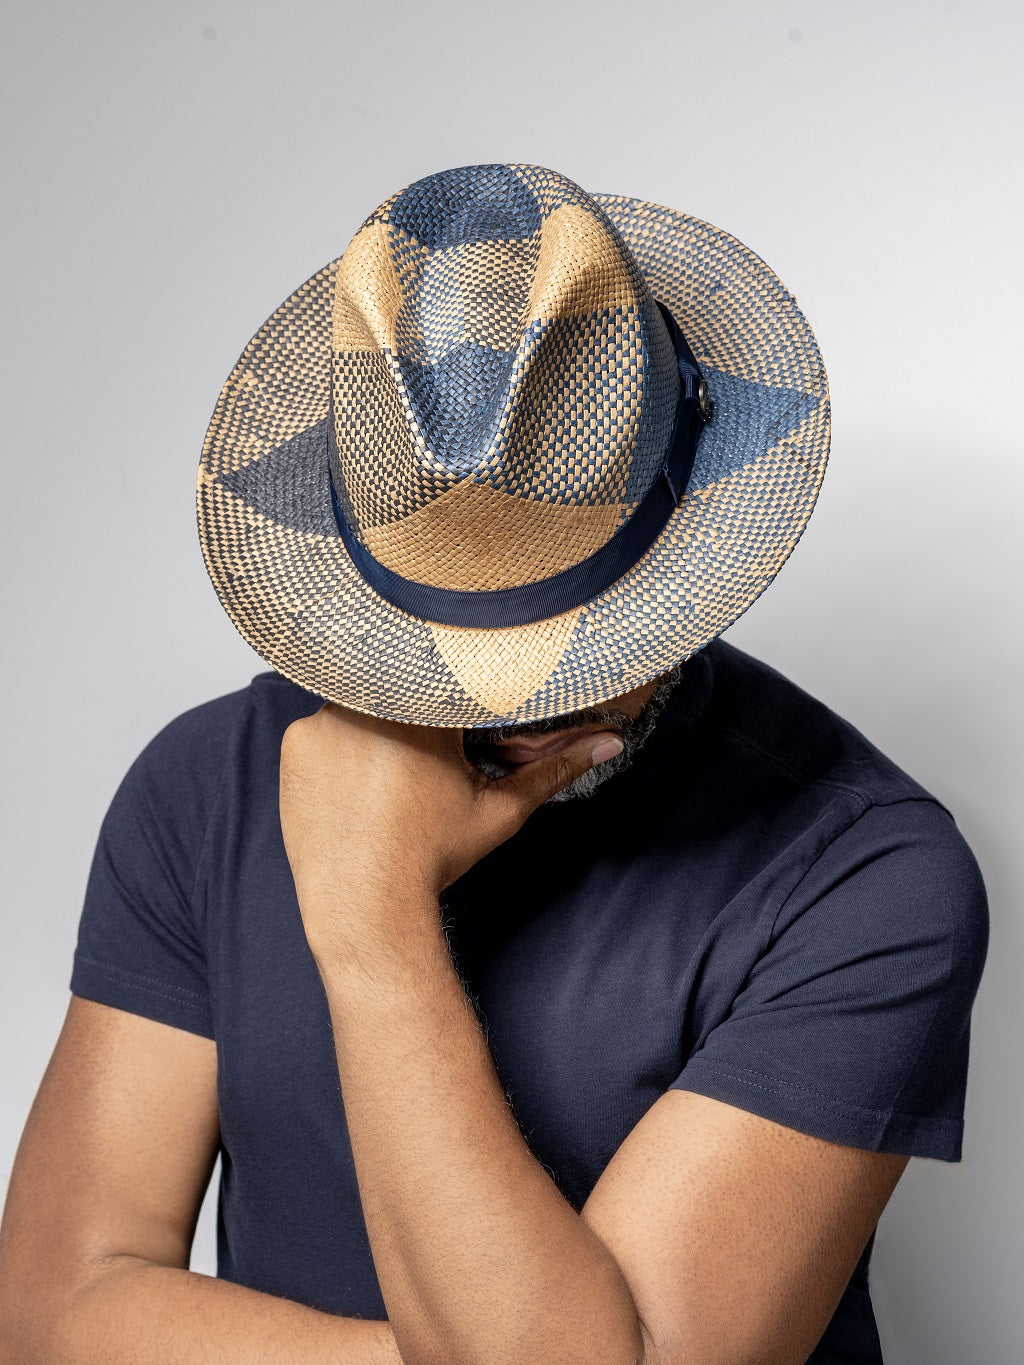 Cuban Collection Hats Bruno Capelo   